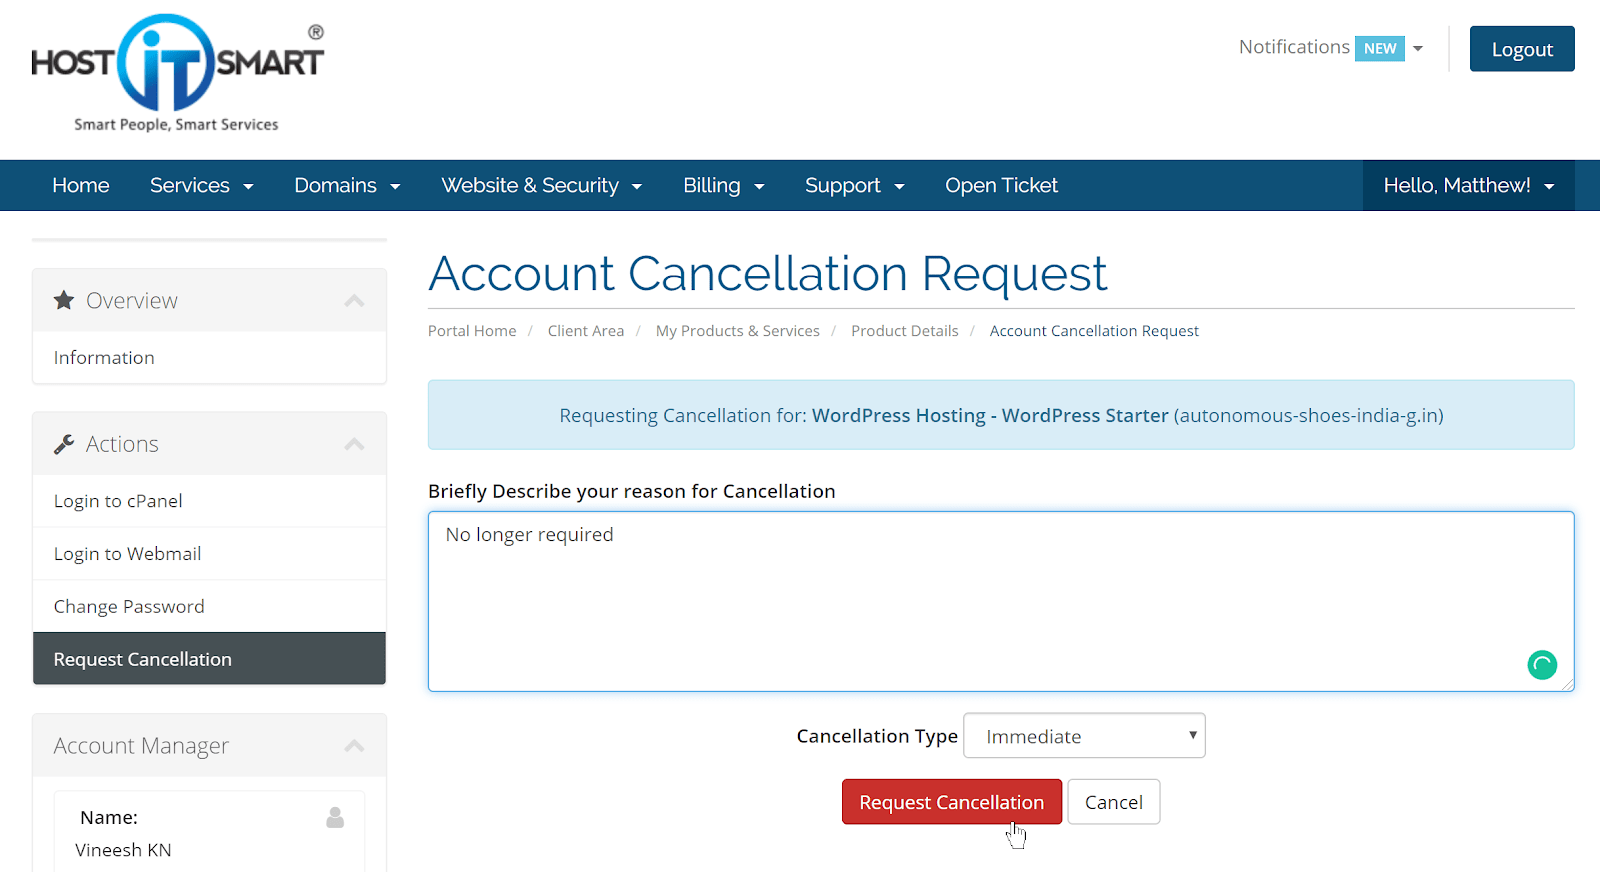 HostItSmart account cancellation screen